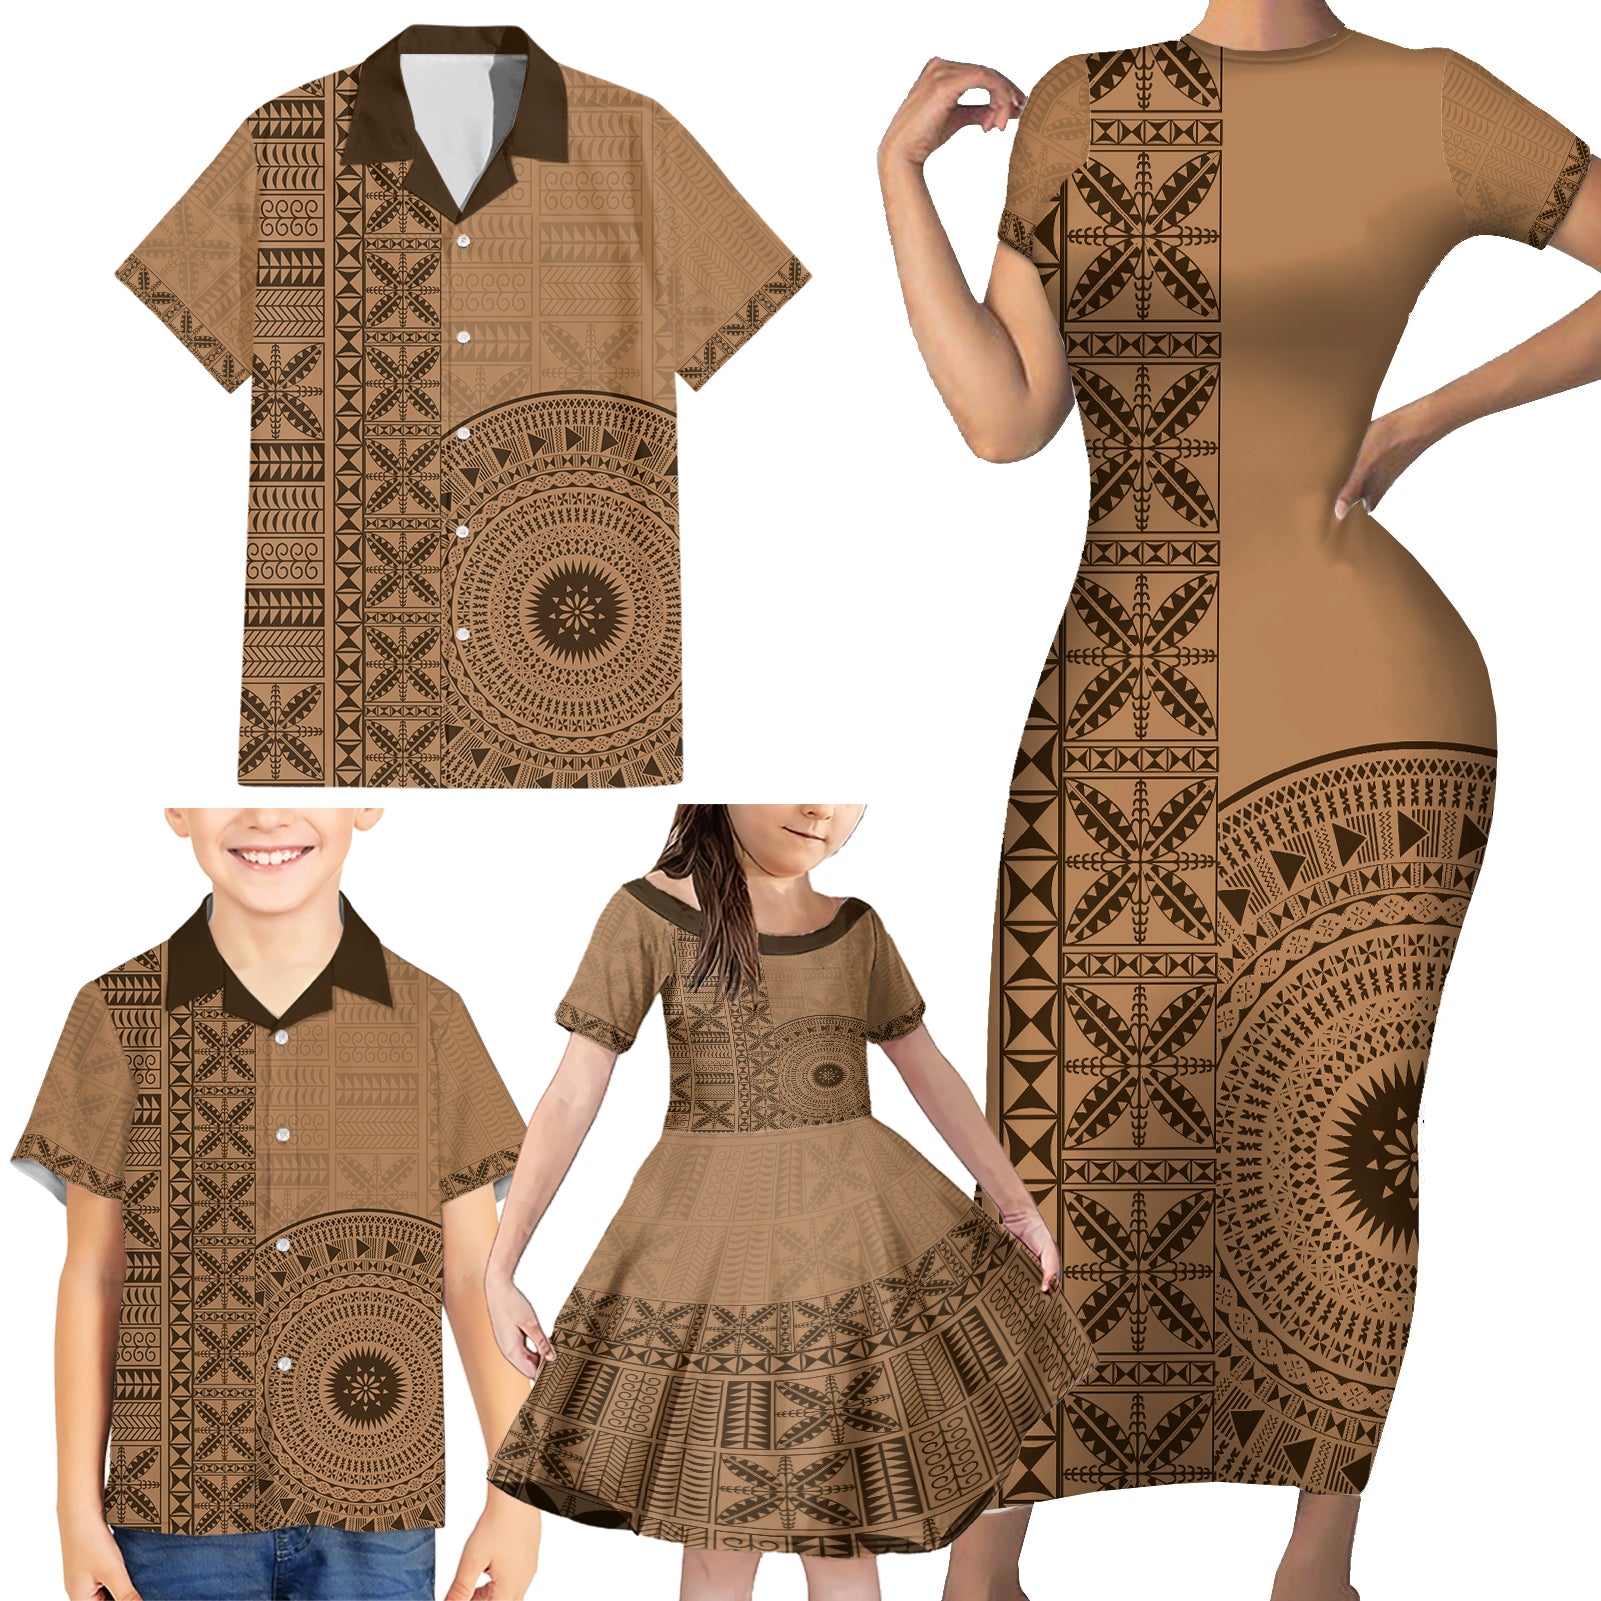 Fakaalofa Lahi Atu Niue Family Matching Short Sleeve Bodycon Dress and Hawaiian Shirt Vintage Hiapo Pattern Brown Version LT14 - Polynesian Pride